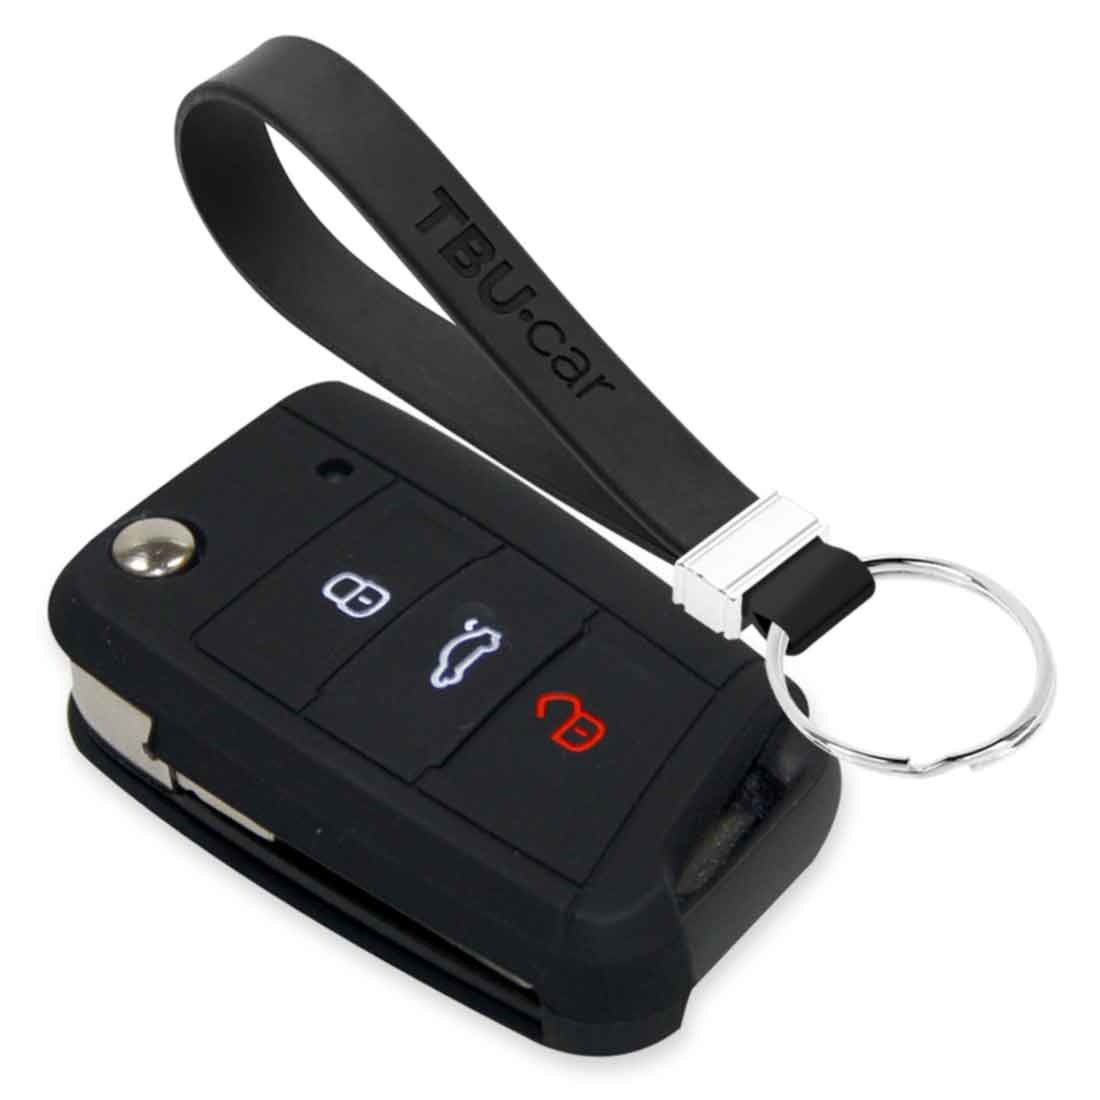 TBU car TBU car Autoschlüssel Hülle kompatibel mit Seat 3 Tasten - Schutzhülle aus Silikon - Auto Schlüsselhülle Cover in Schwarz